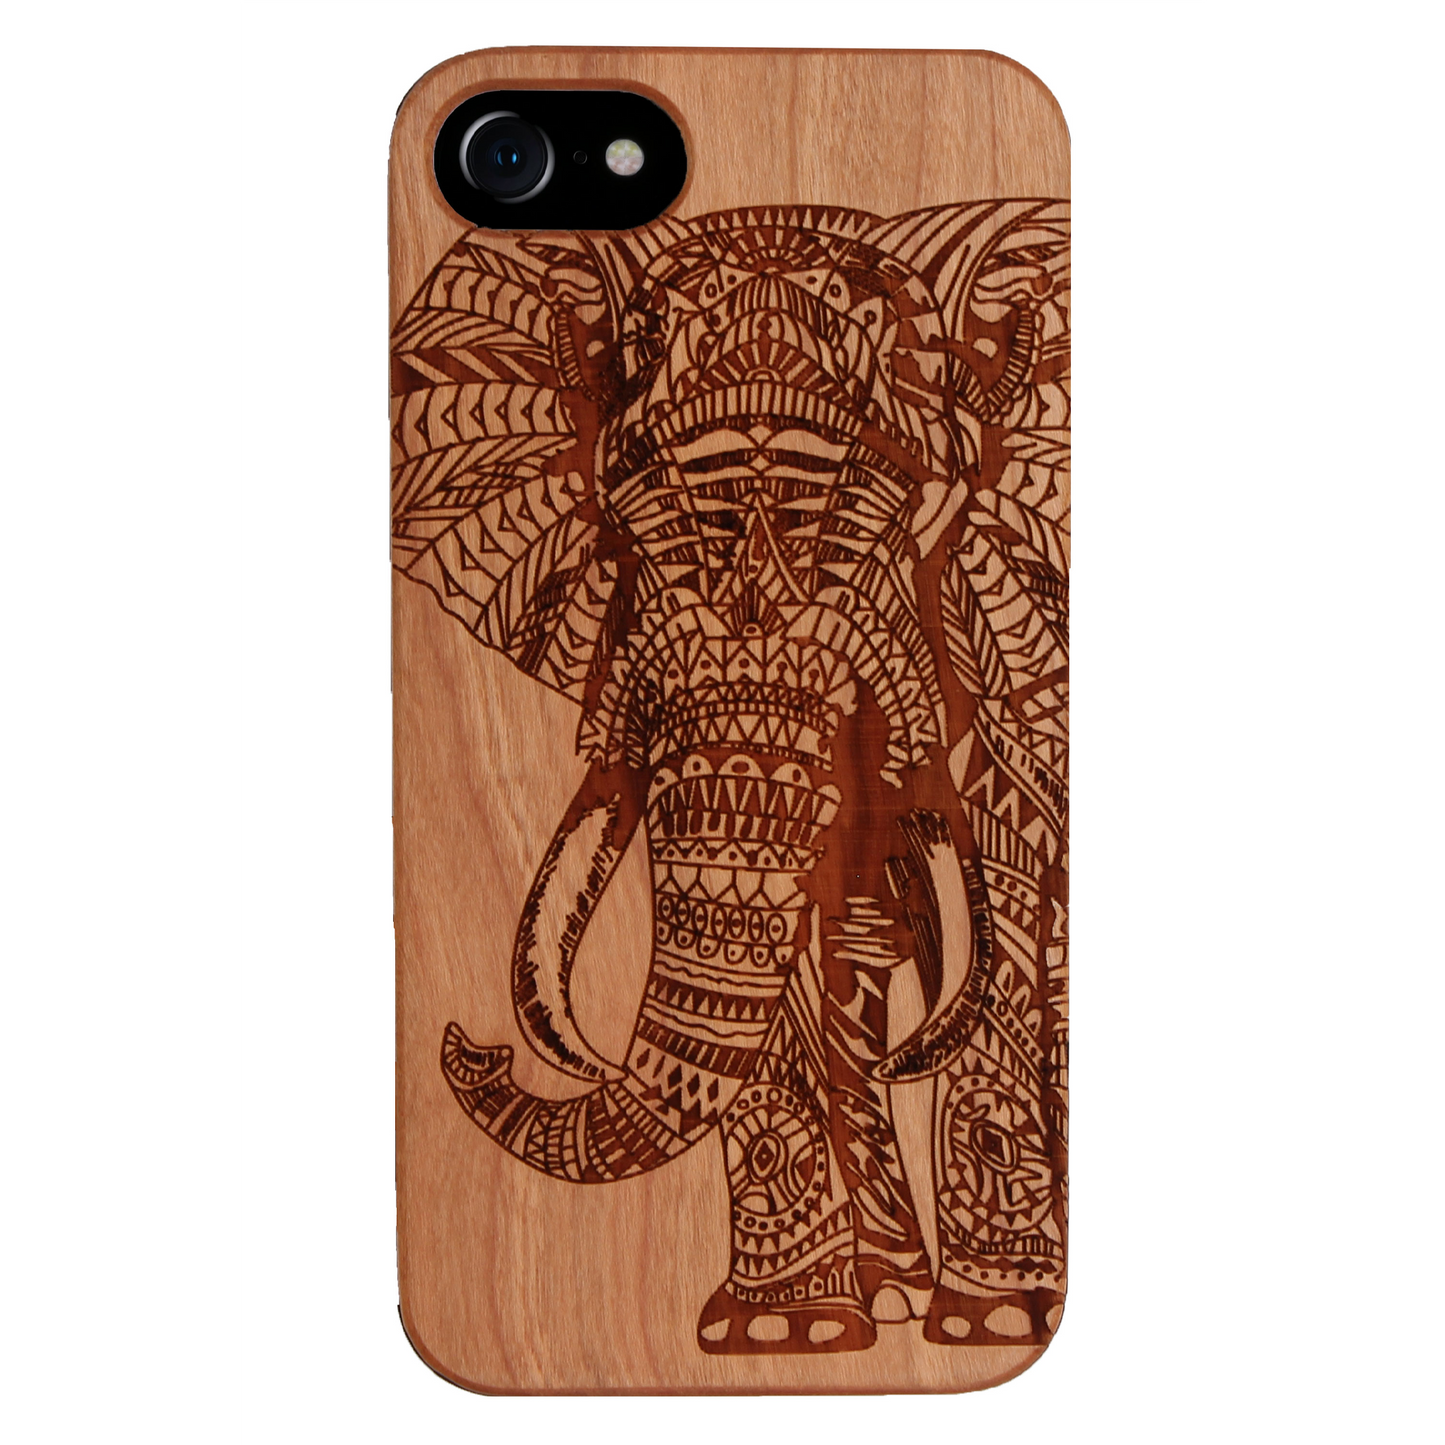 Elephant Eden case made of cherry wood